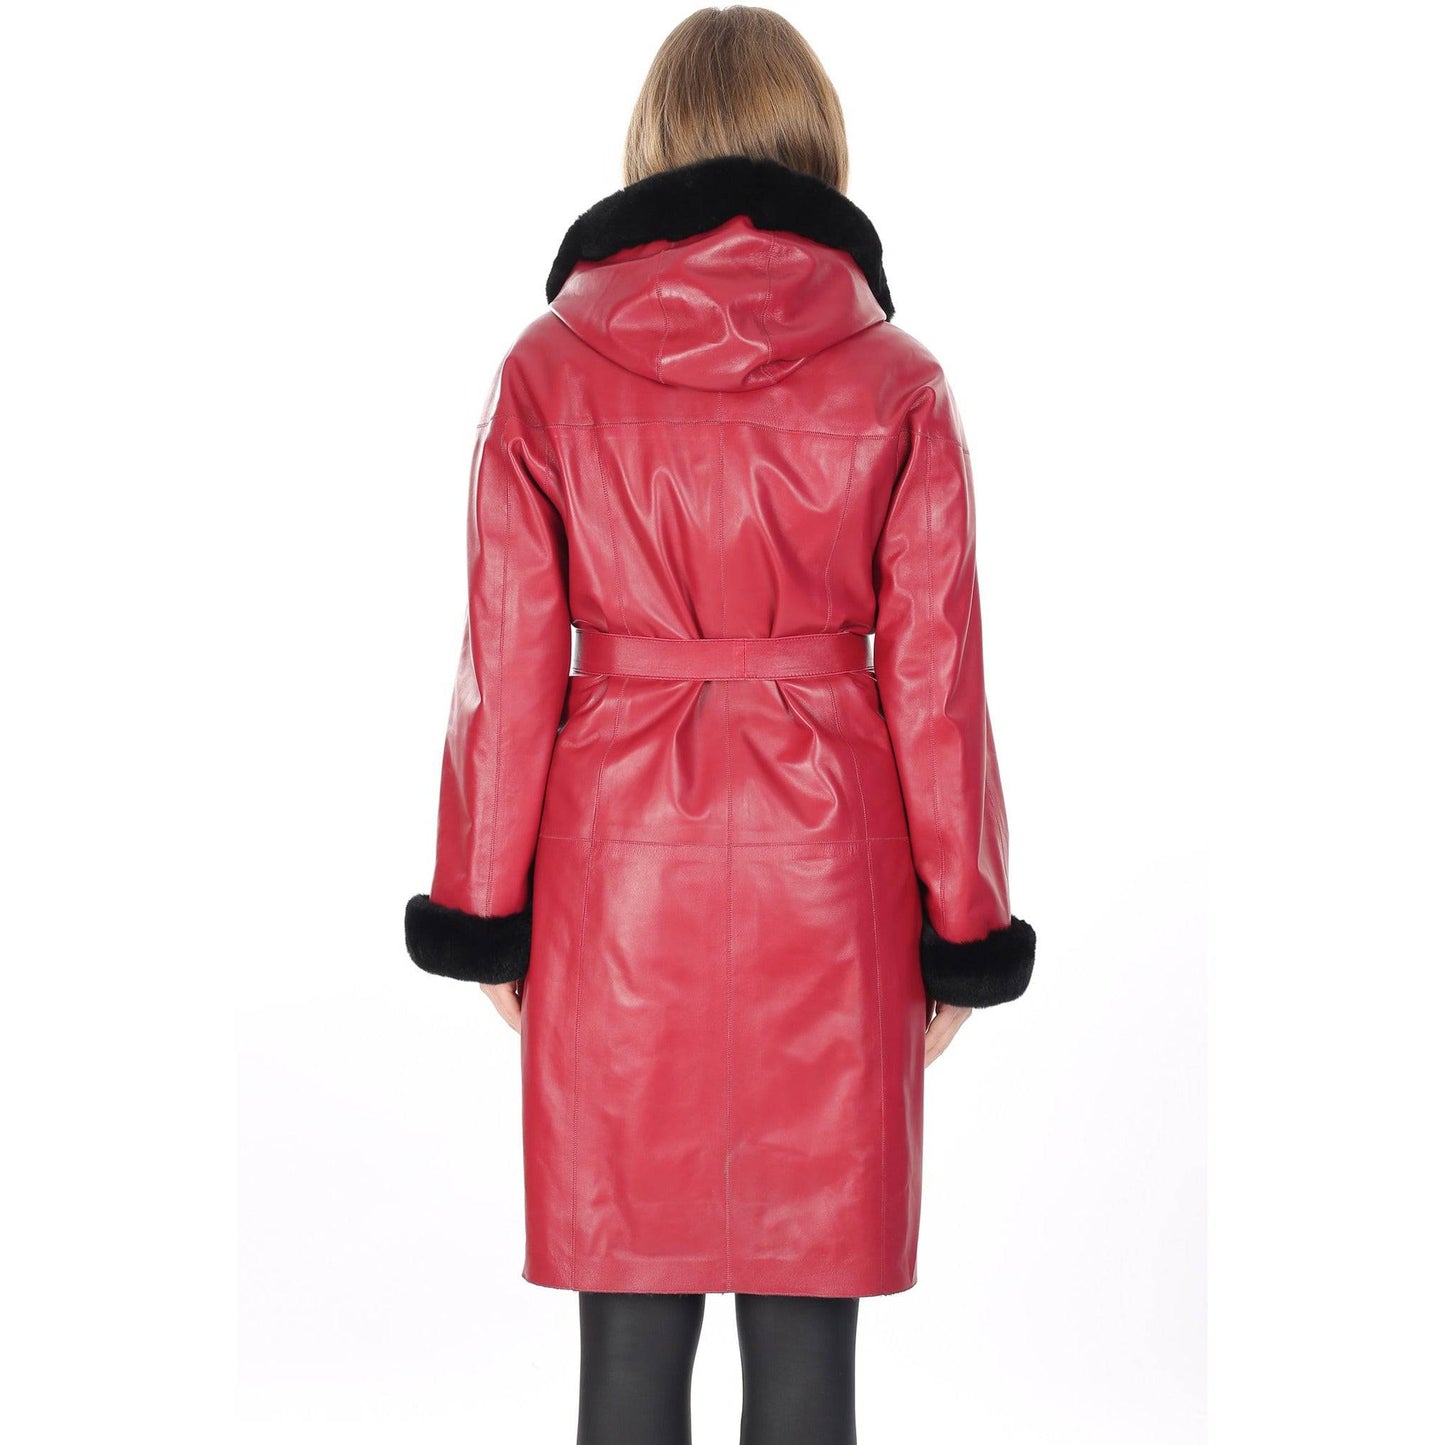 BARYA NEW YORK Women's Rex Rabbit Fur Trim Leather Jacket – Zooloo Leather